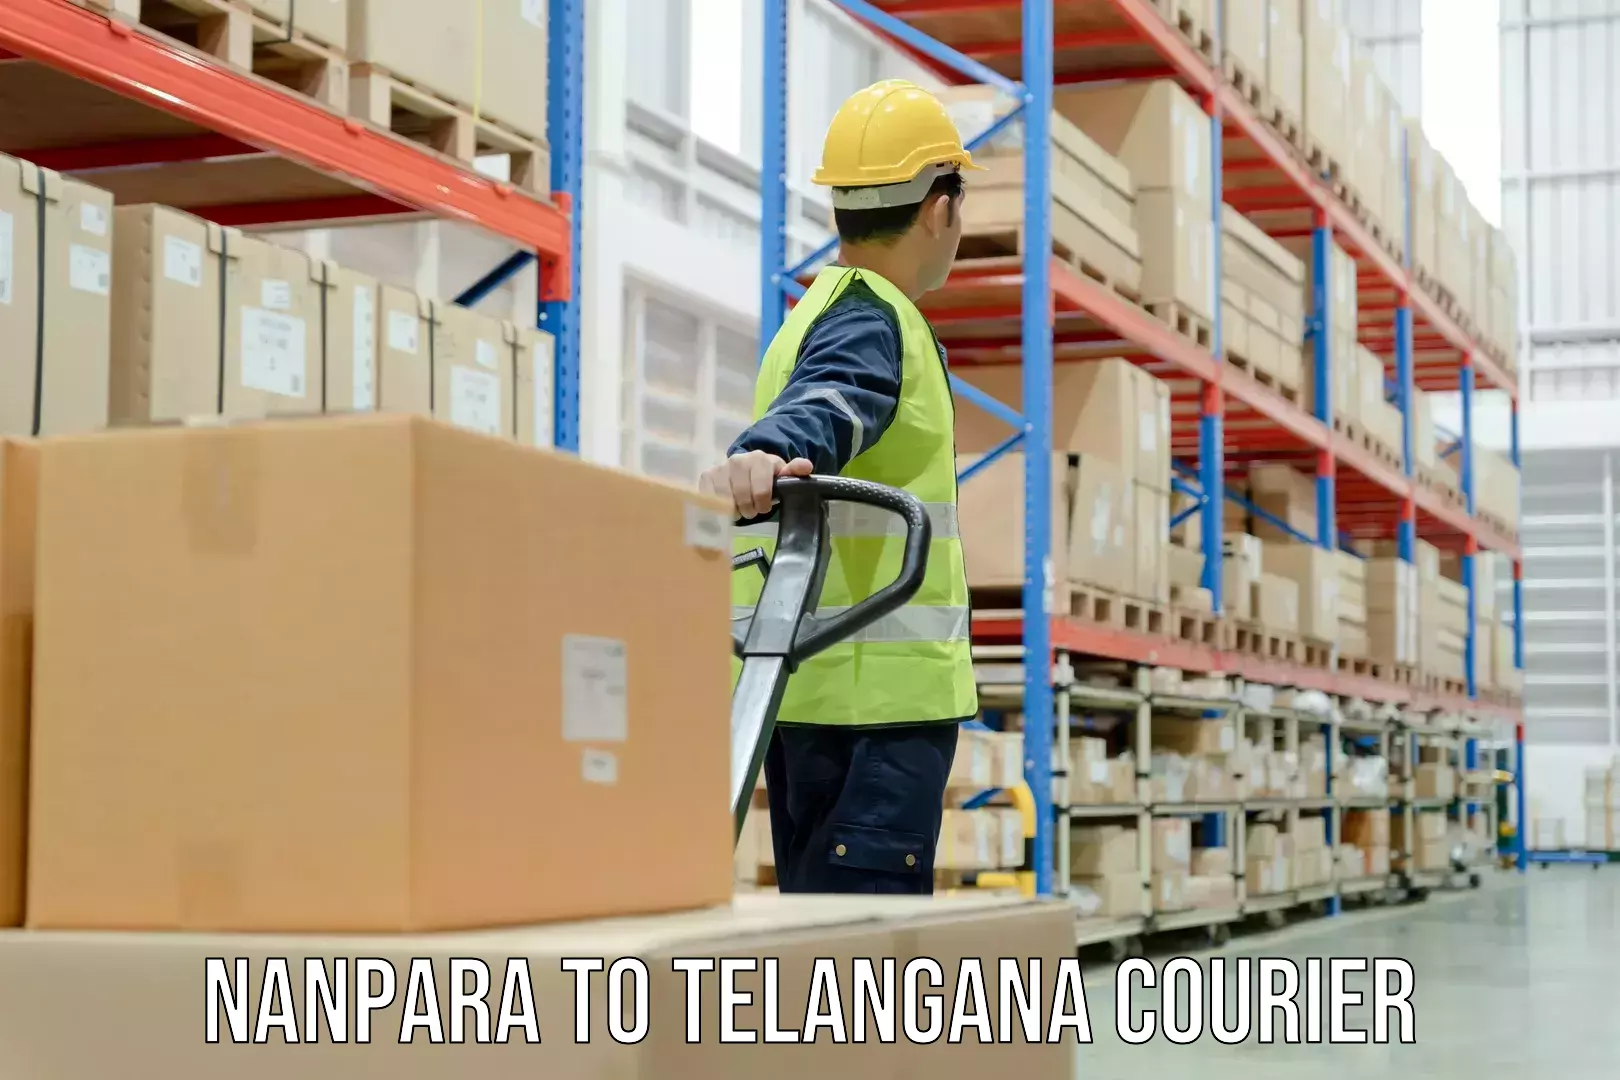 Courier service comparison Nanpara to Vikarabad